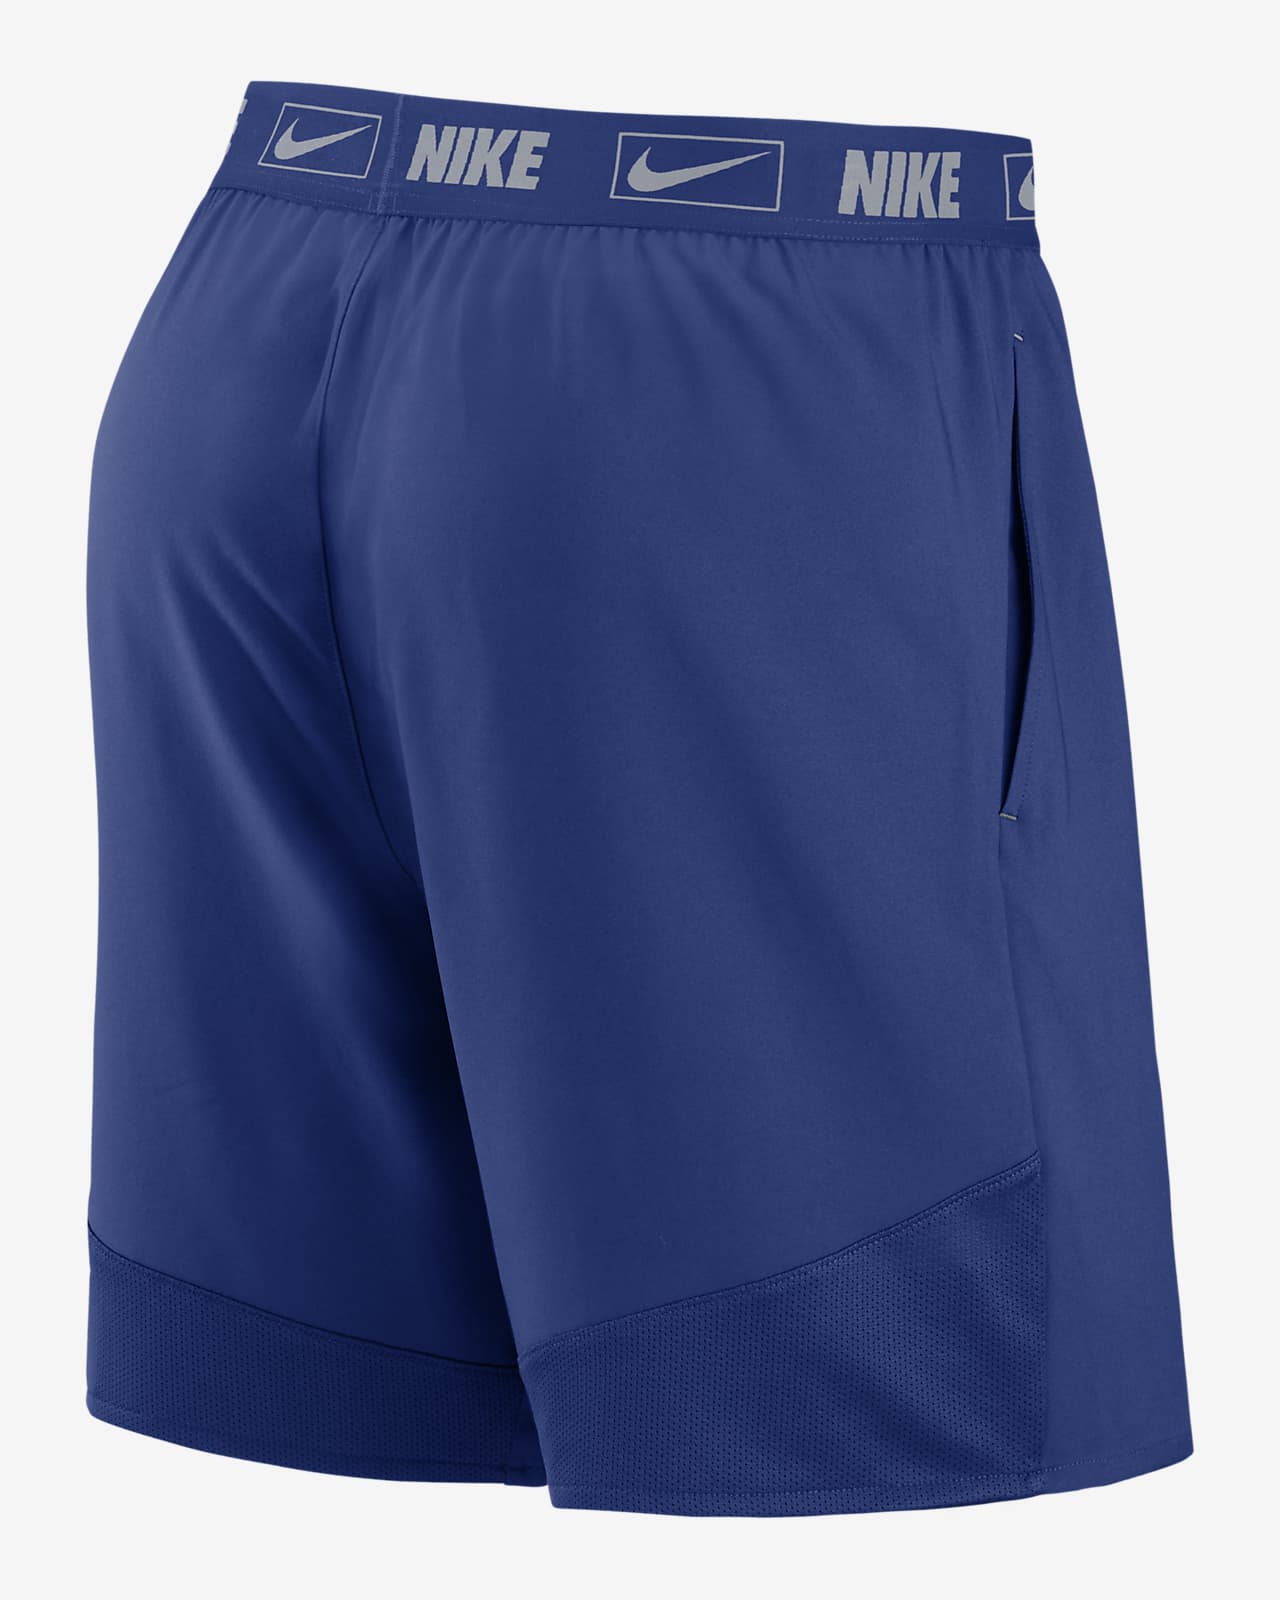 Nike Dri-FIT Travel (MLB Atlanta Braves) Men's Pants.